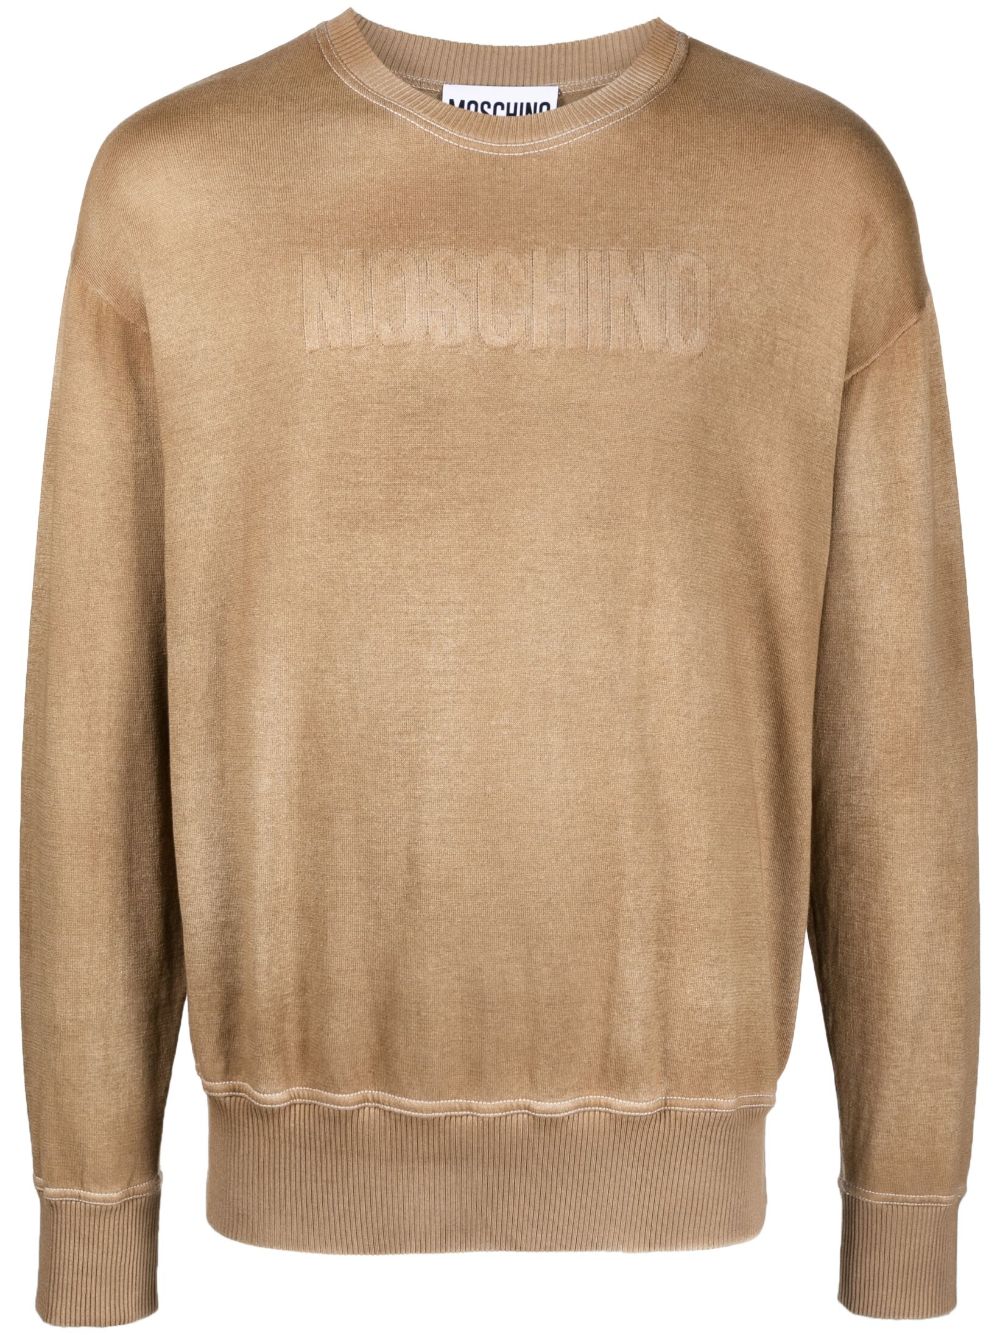 Moschino logo-intarsia knitted sweater - Brown von Moschino